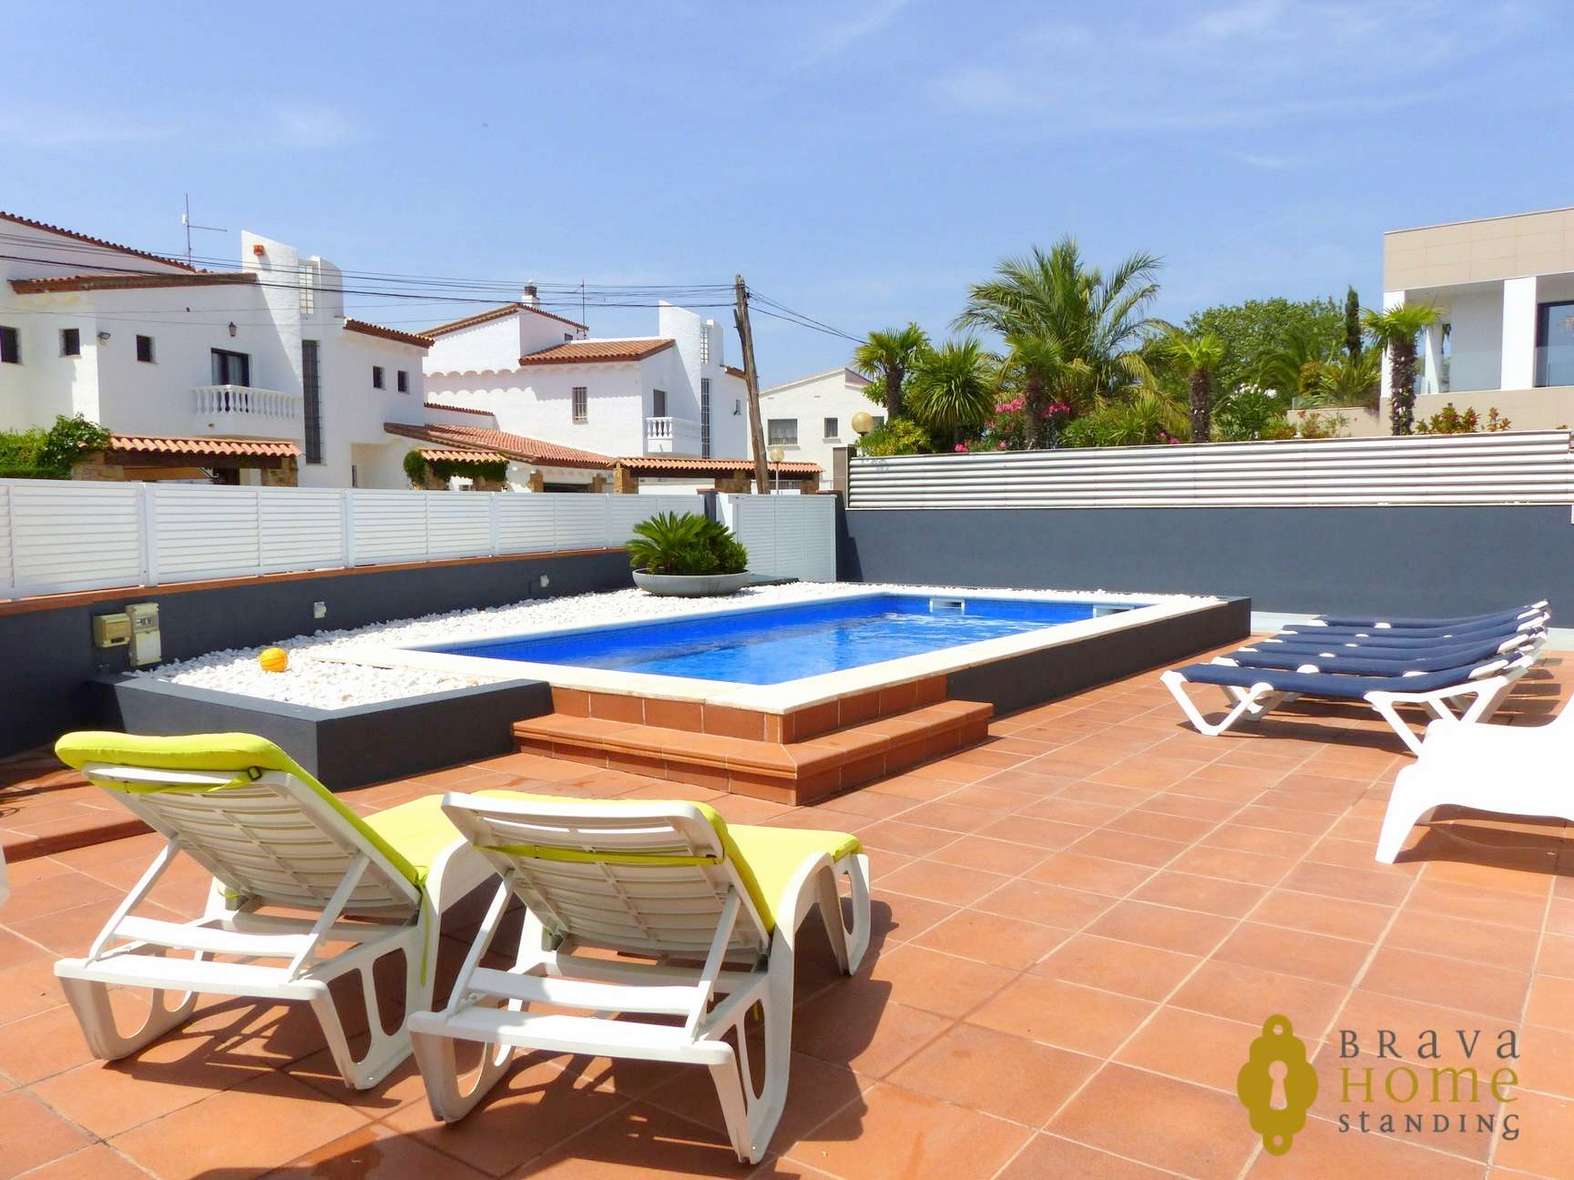 Spectacular villa with mooring, for sale in Rosas - Santa Margarita